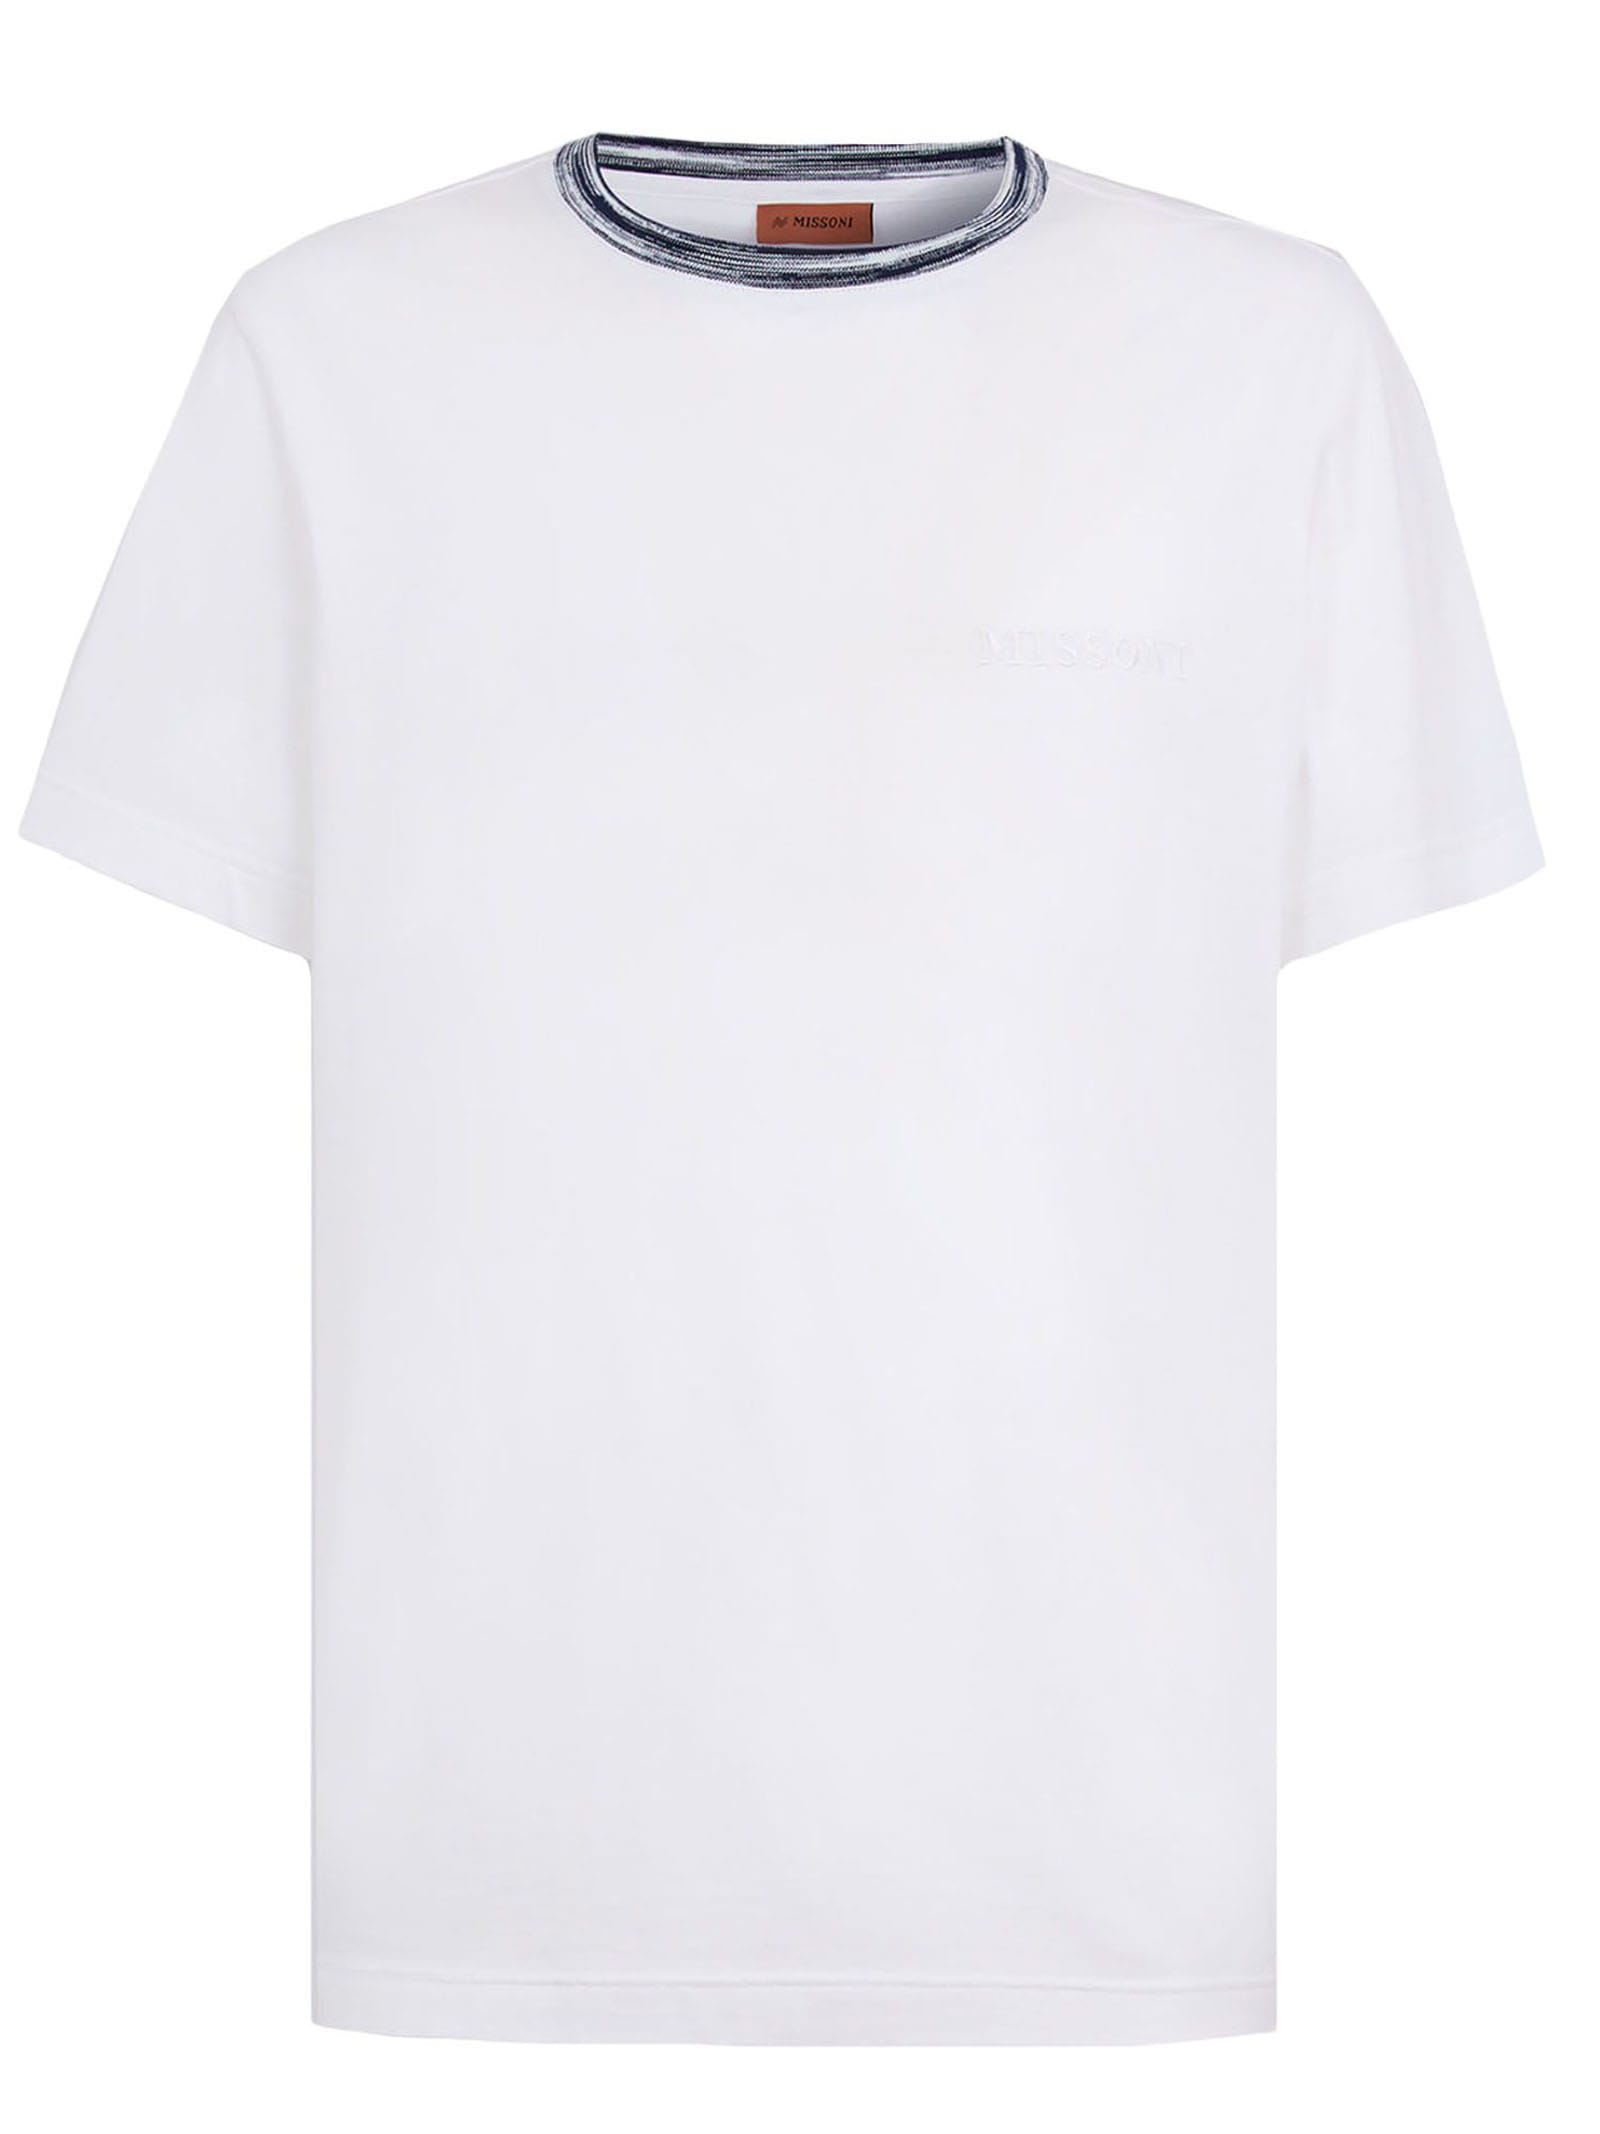 Missoni White Cotton Jersey T-shirt